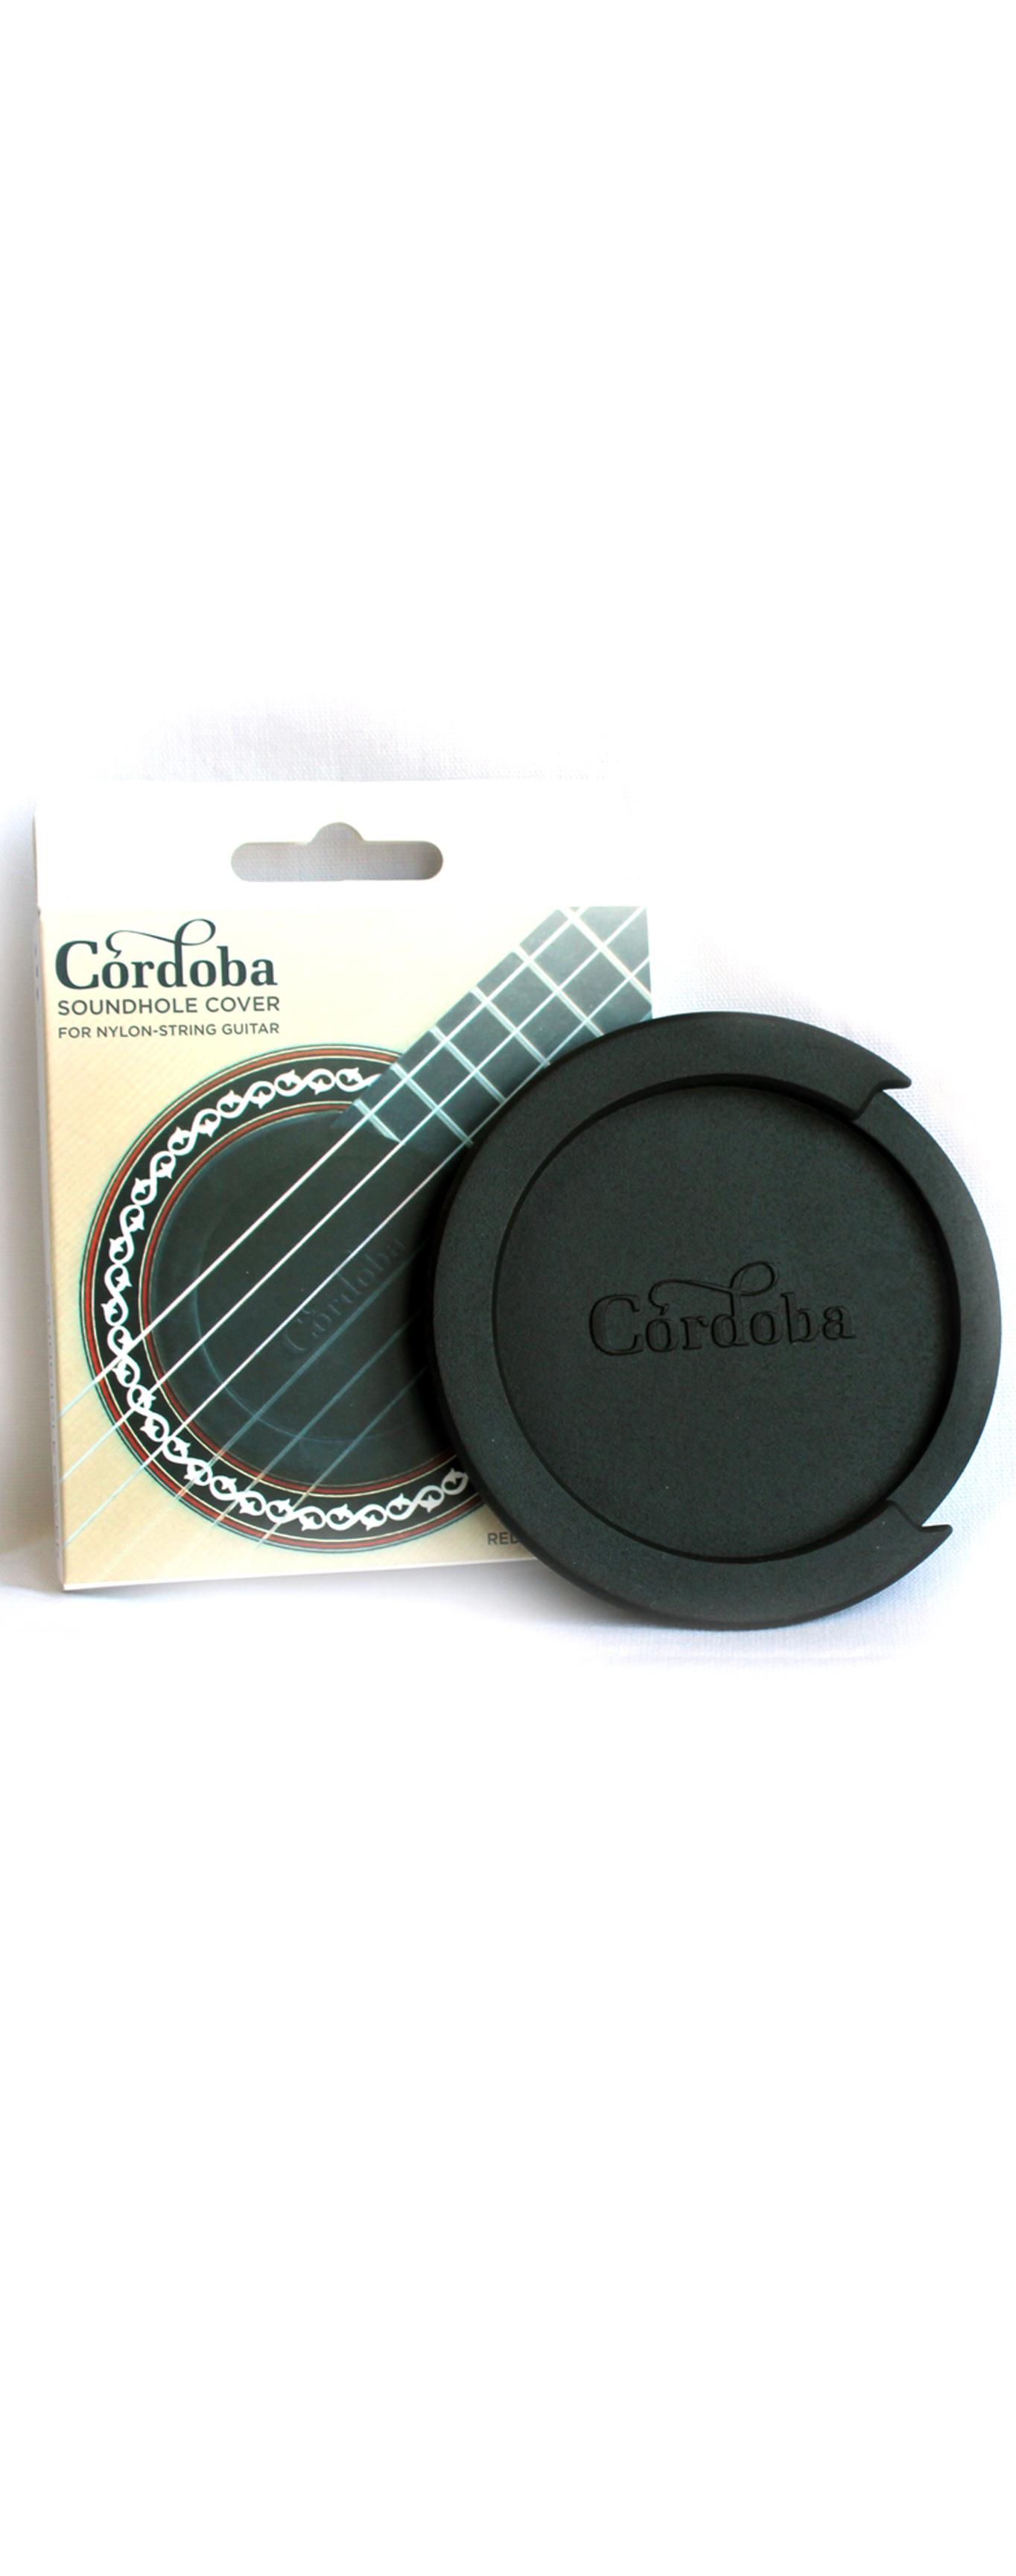 Cordoba Soundhole Cover - Cubierta anti-feedback - Variation 1